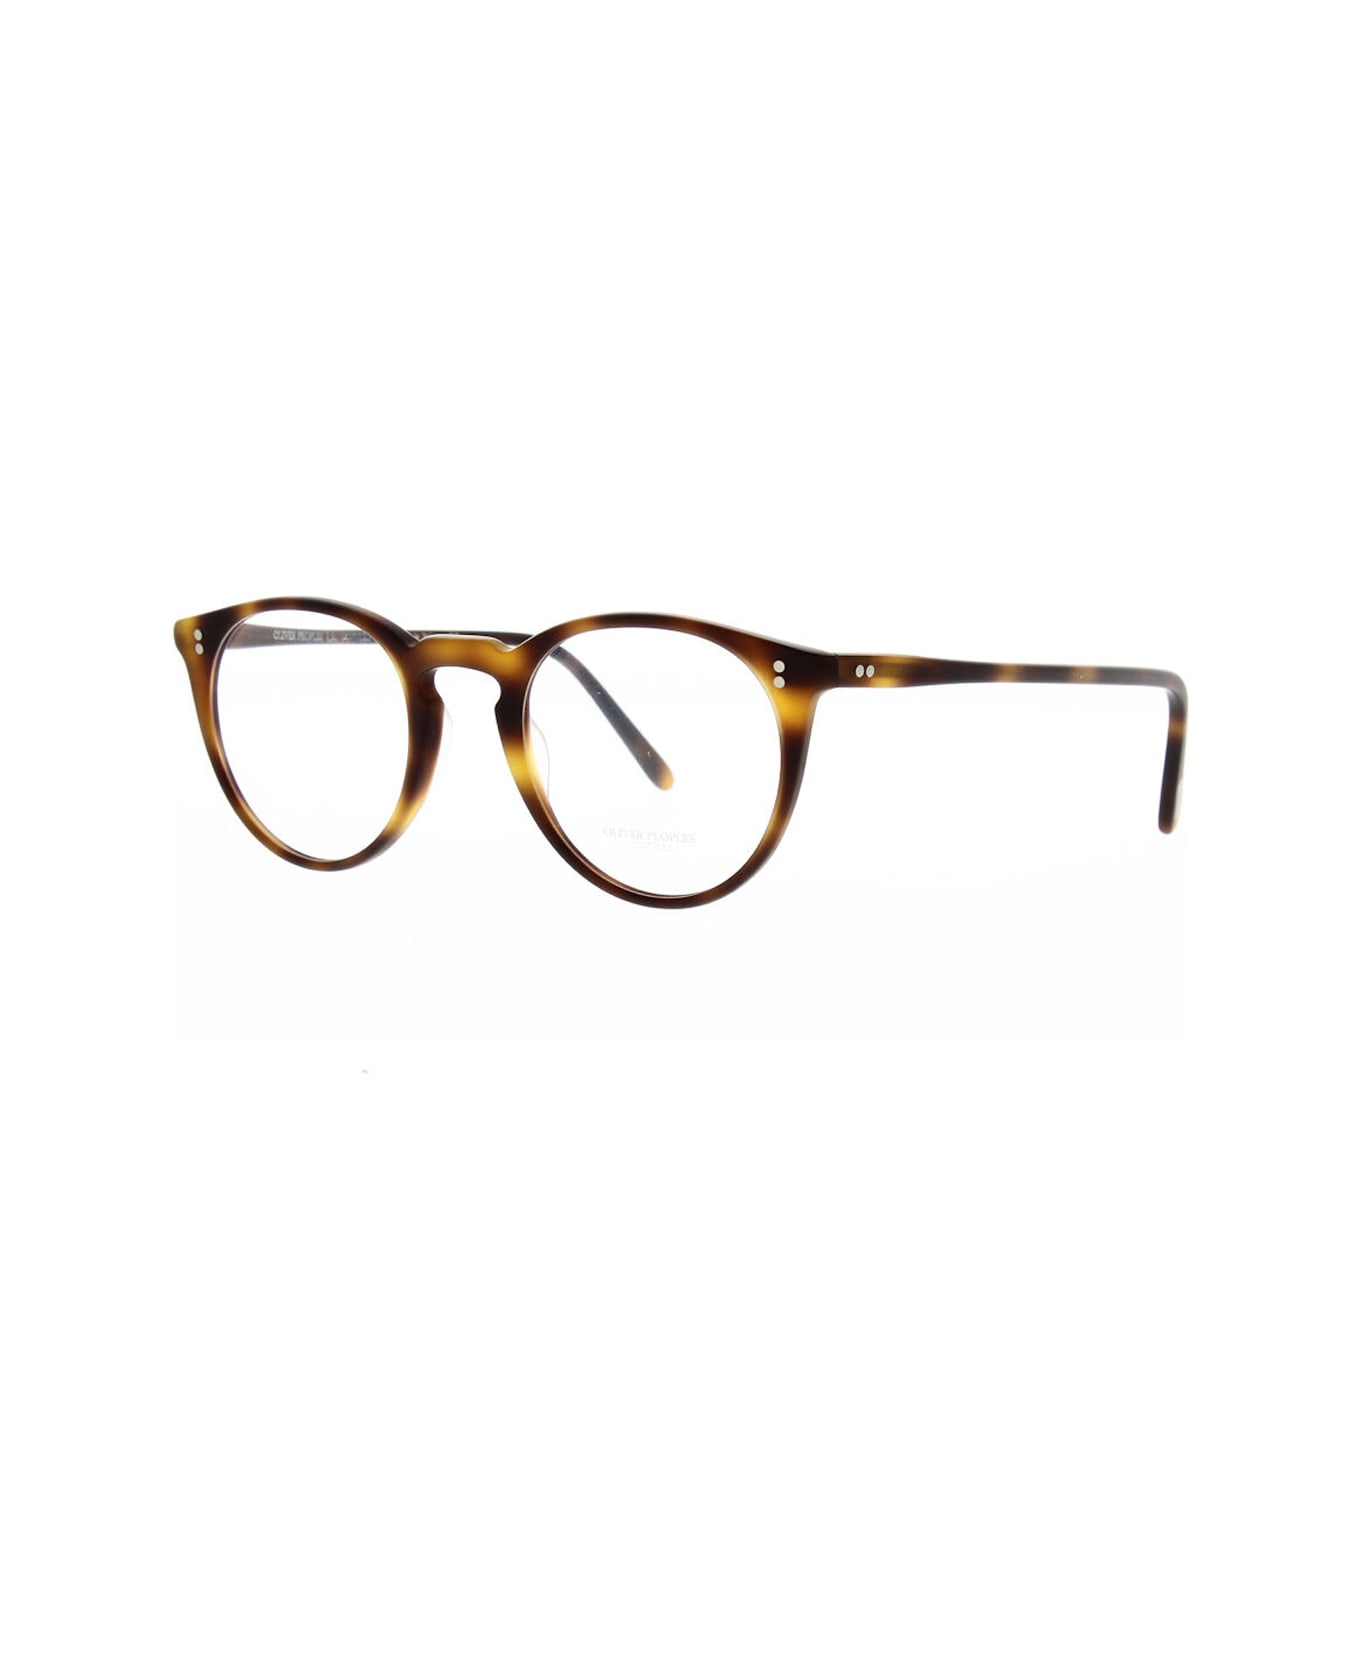 Oliver Peoples Ov5183 Vista 1552 Glasses - Marrone